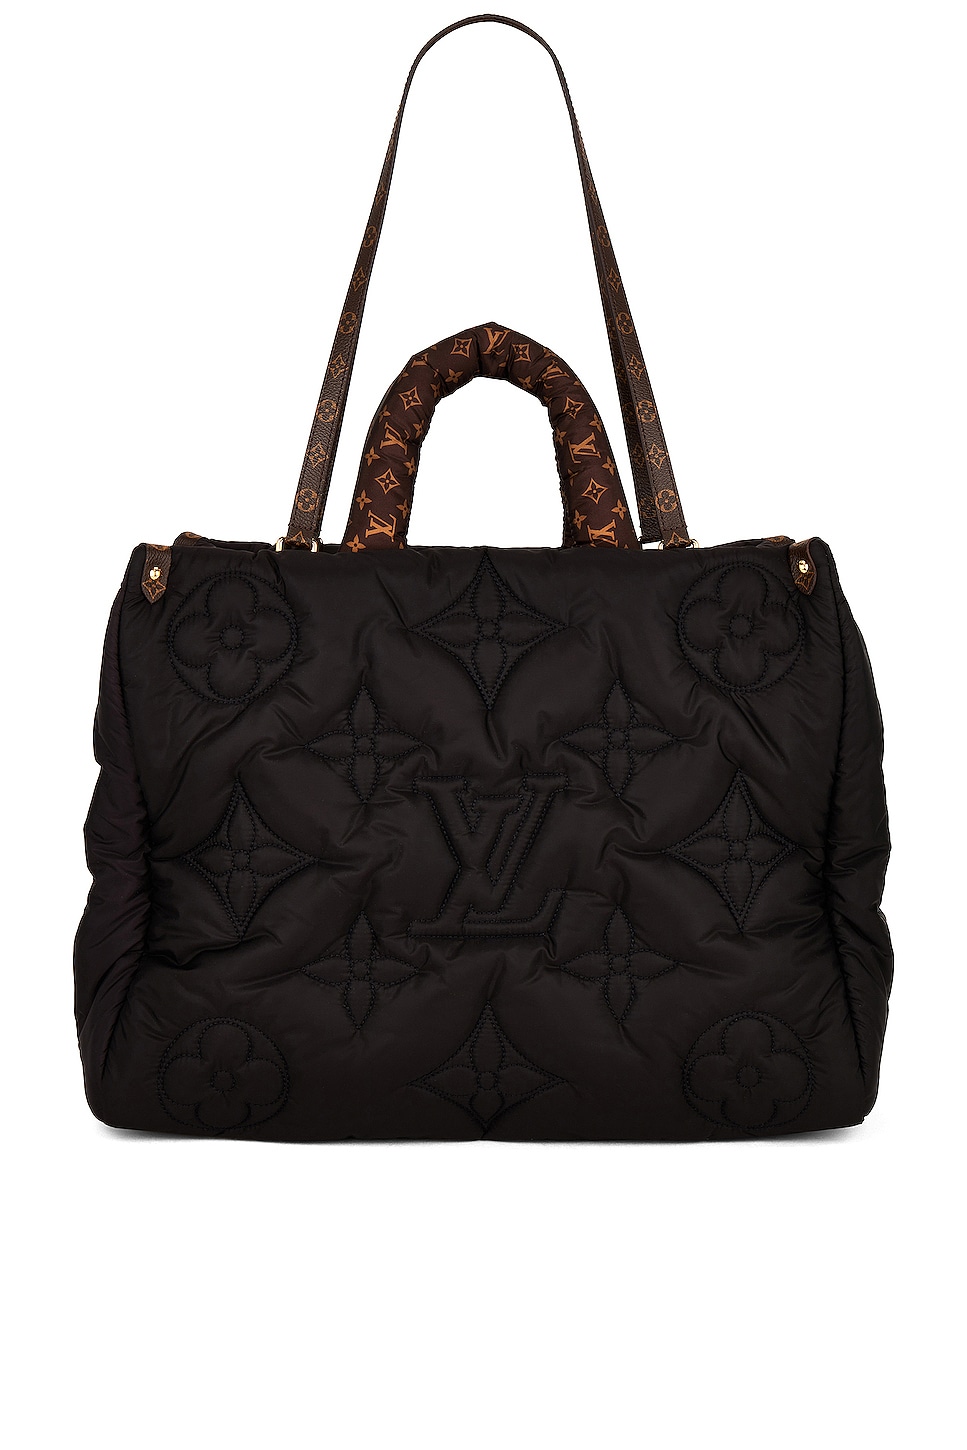 FWRD Renew Louis Vuitton Pillow Speedy Bandouliere 25 Bag in Navy